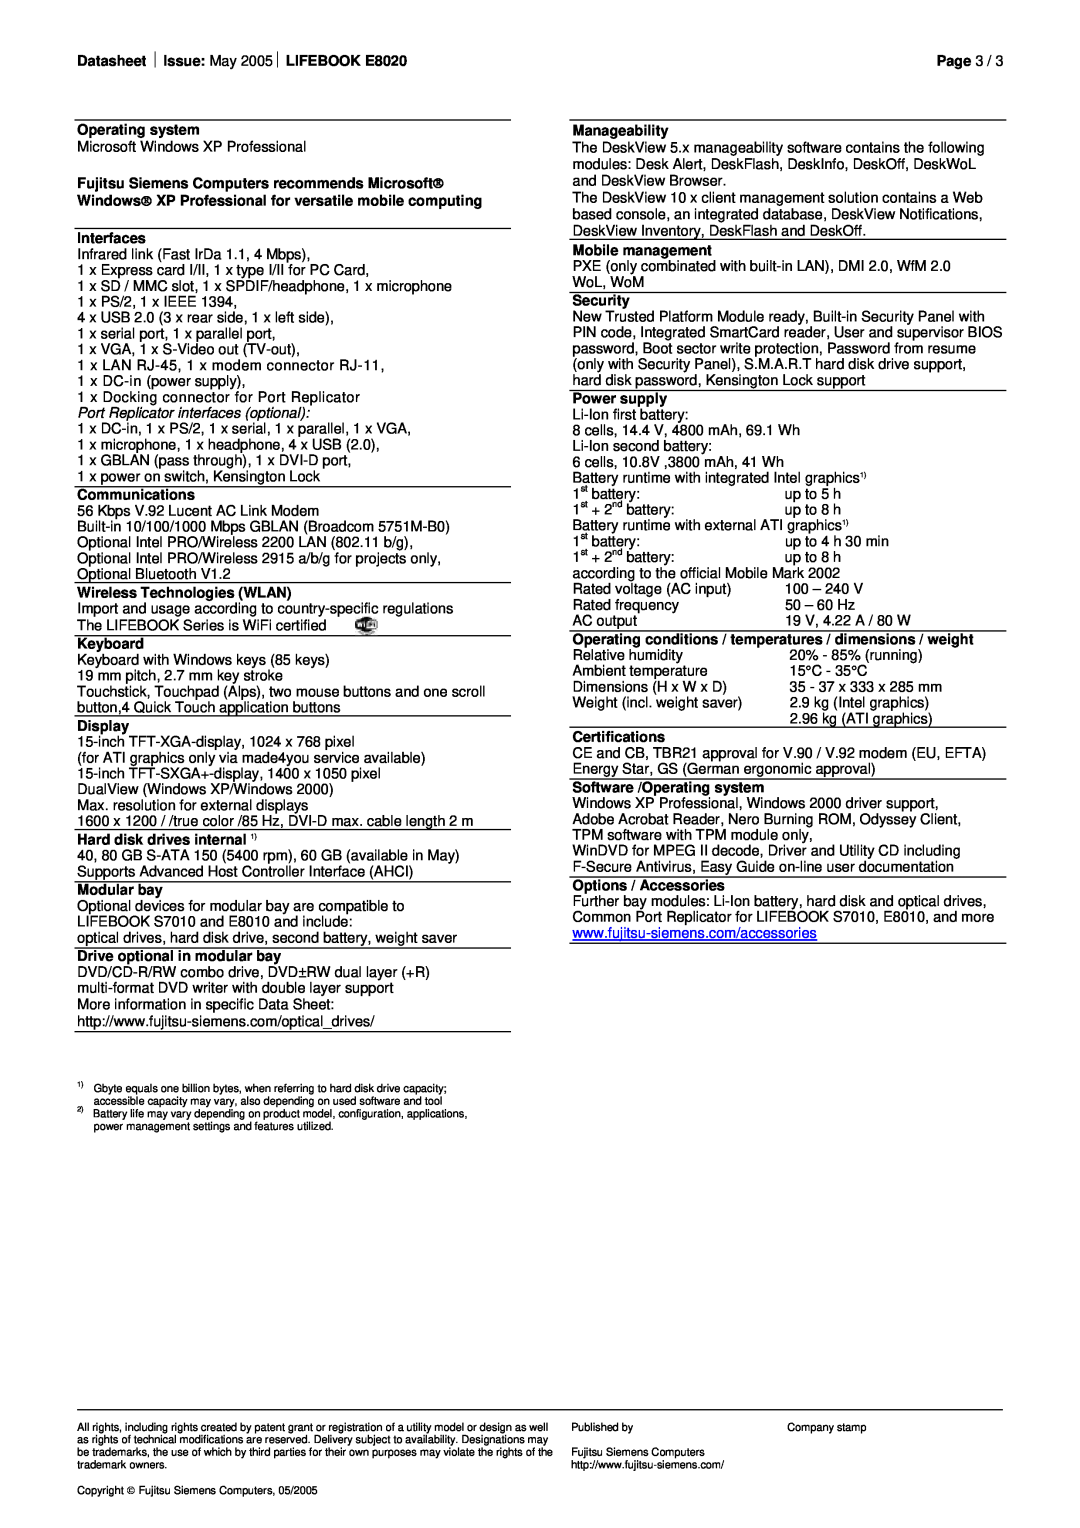 Fujitsu manual Datasheet Issue May 2005 LIFEBOOK E8020 Operating system 